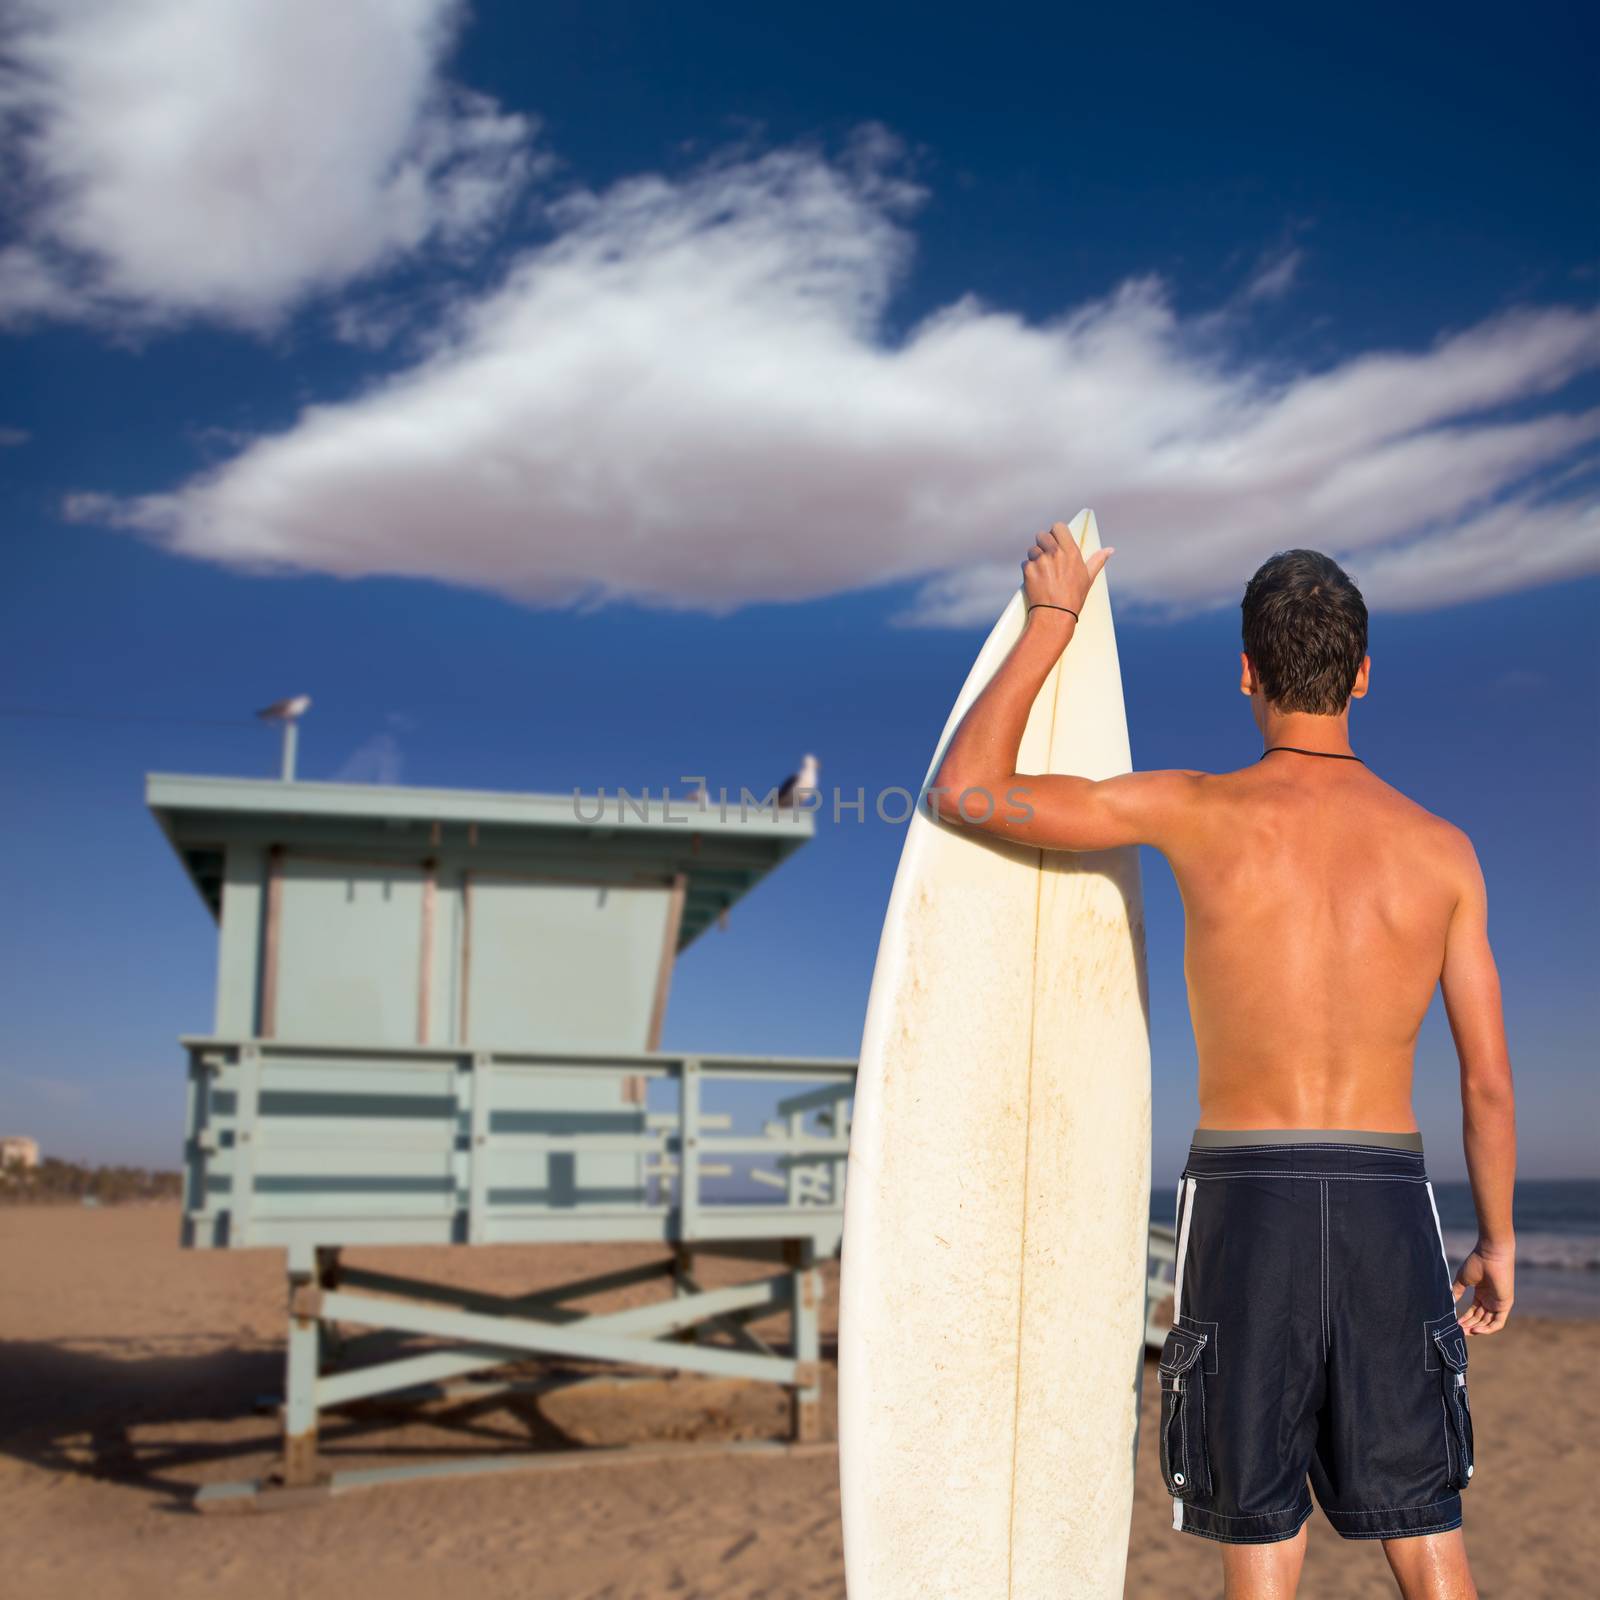 Boy surfer back view holding surfboard on beach by lunamarina